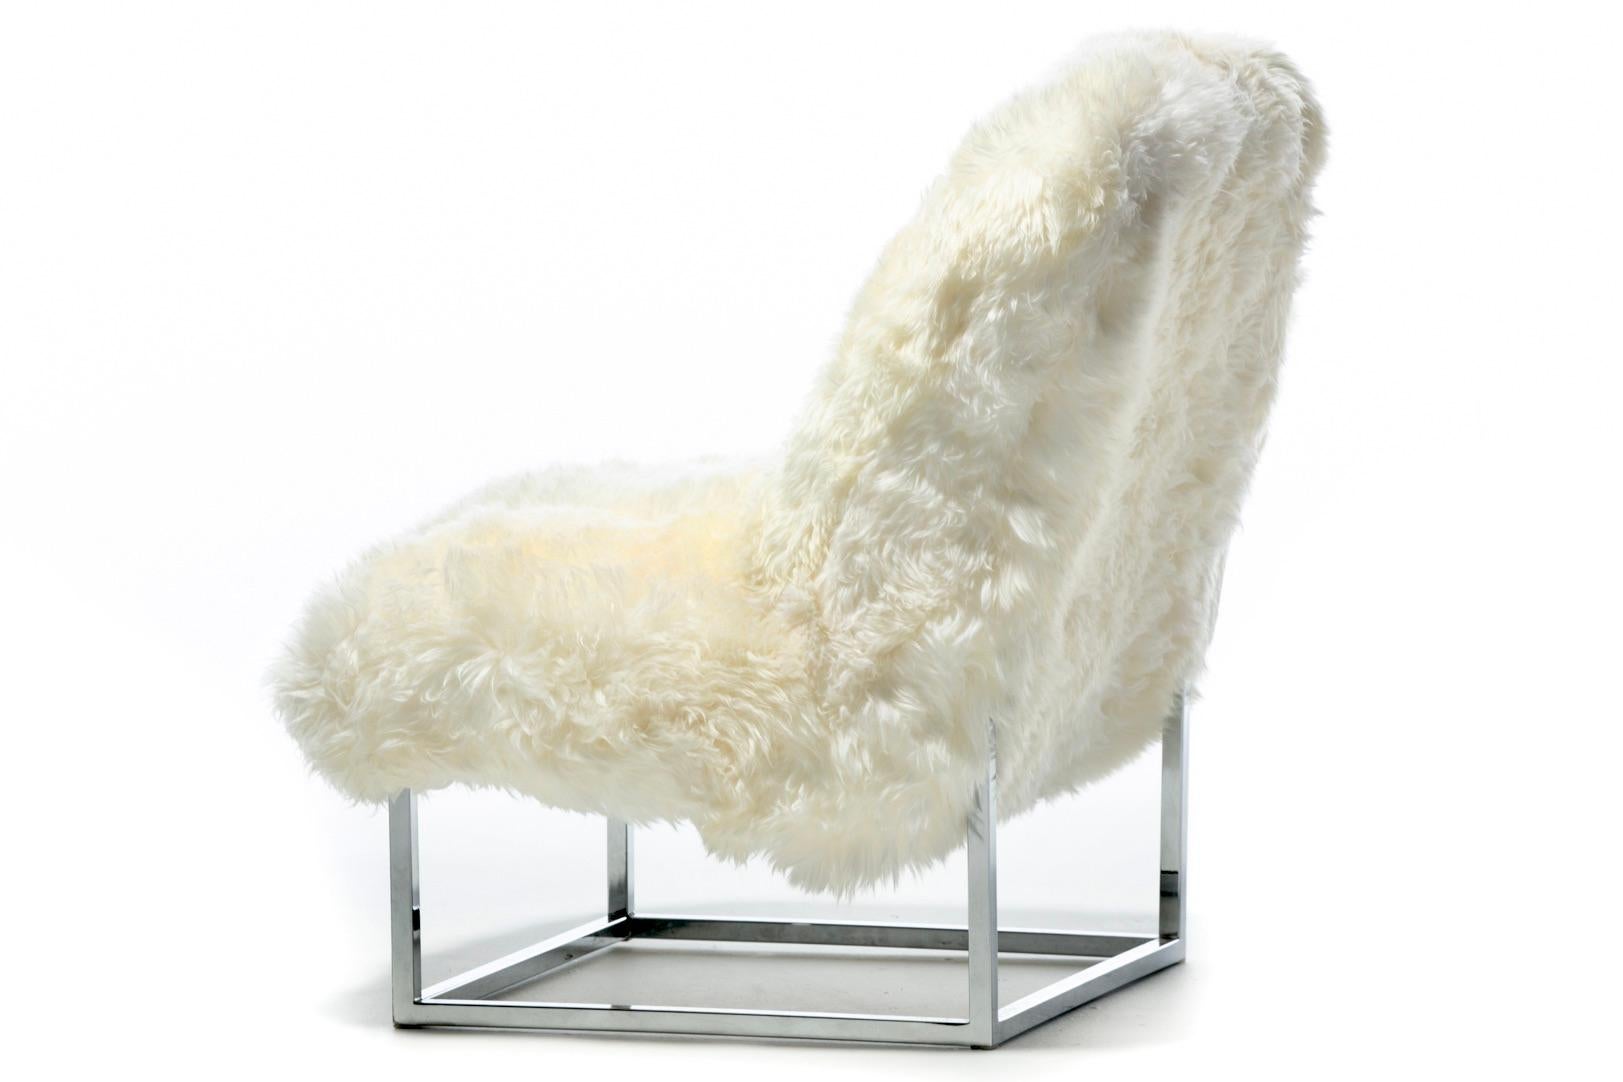 Pair of Milo Baughman Style Sheepskin & Chrome Slipper Chairs c. 1970s For Sale 9